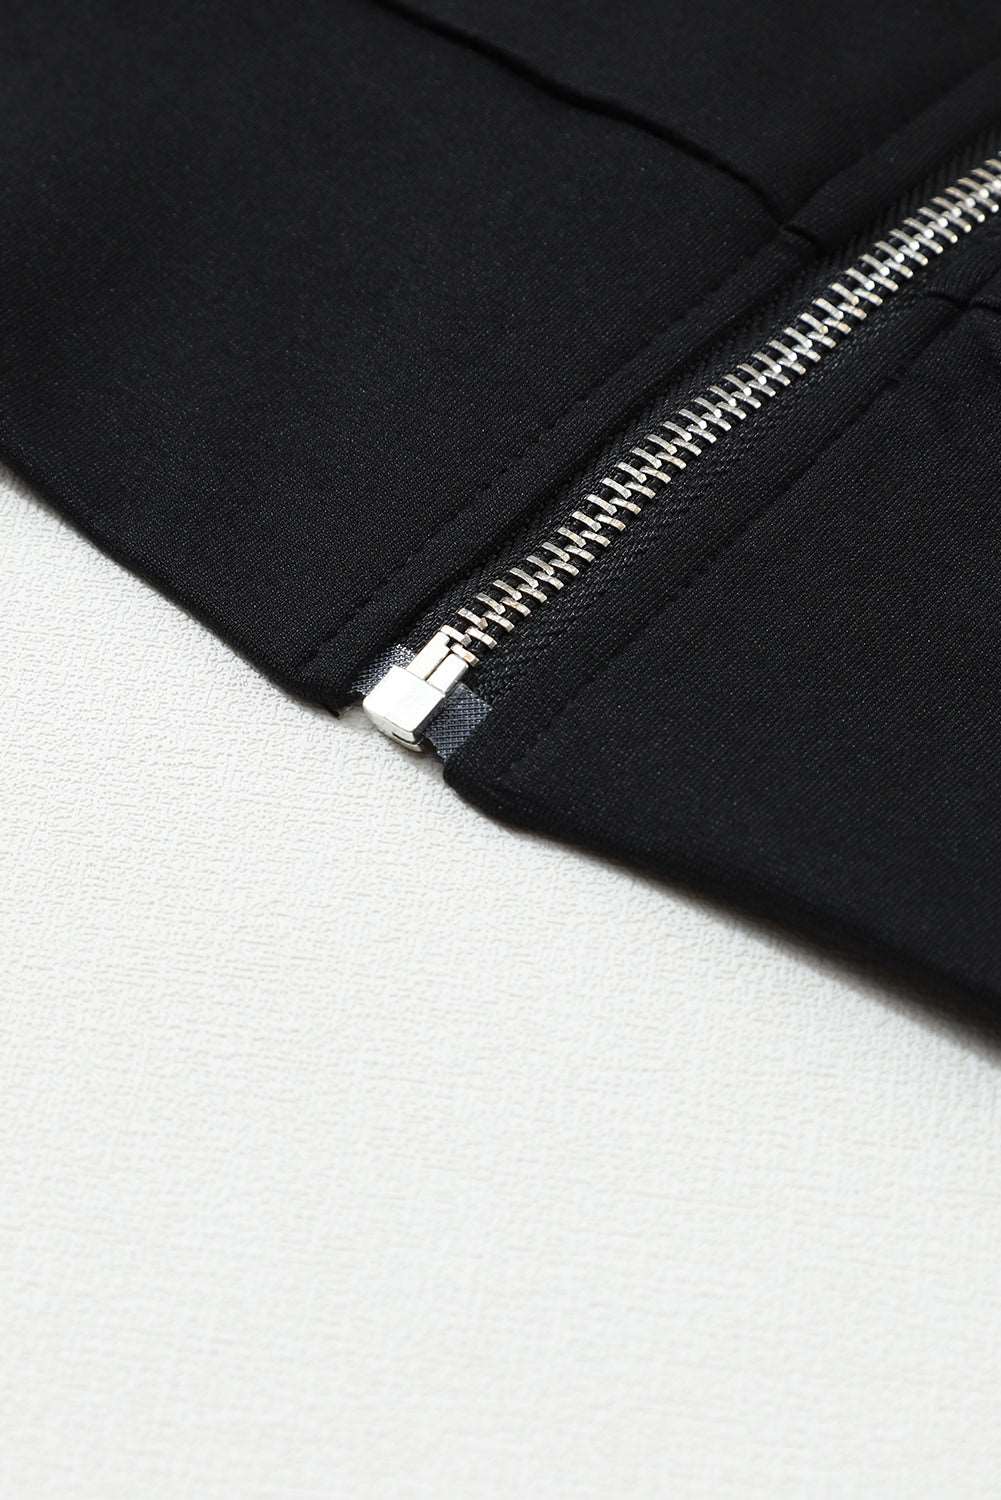 Black Lattice Mesh Sleeve Zipper Bomber Jacket - Bellisima Clothing Collective